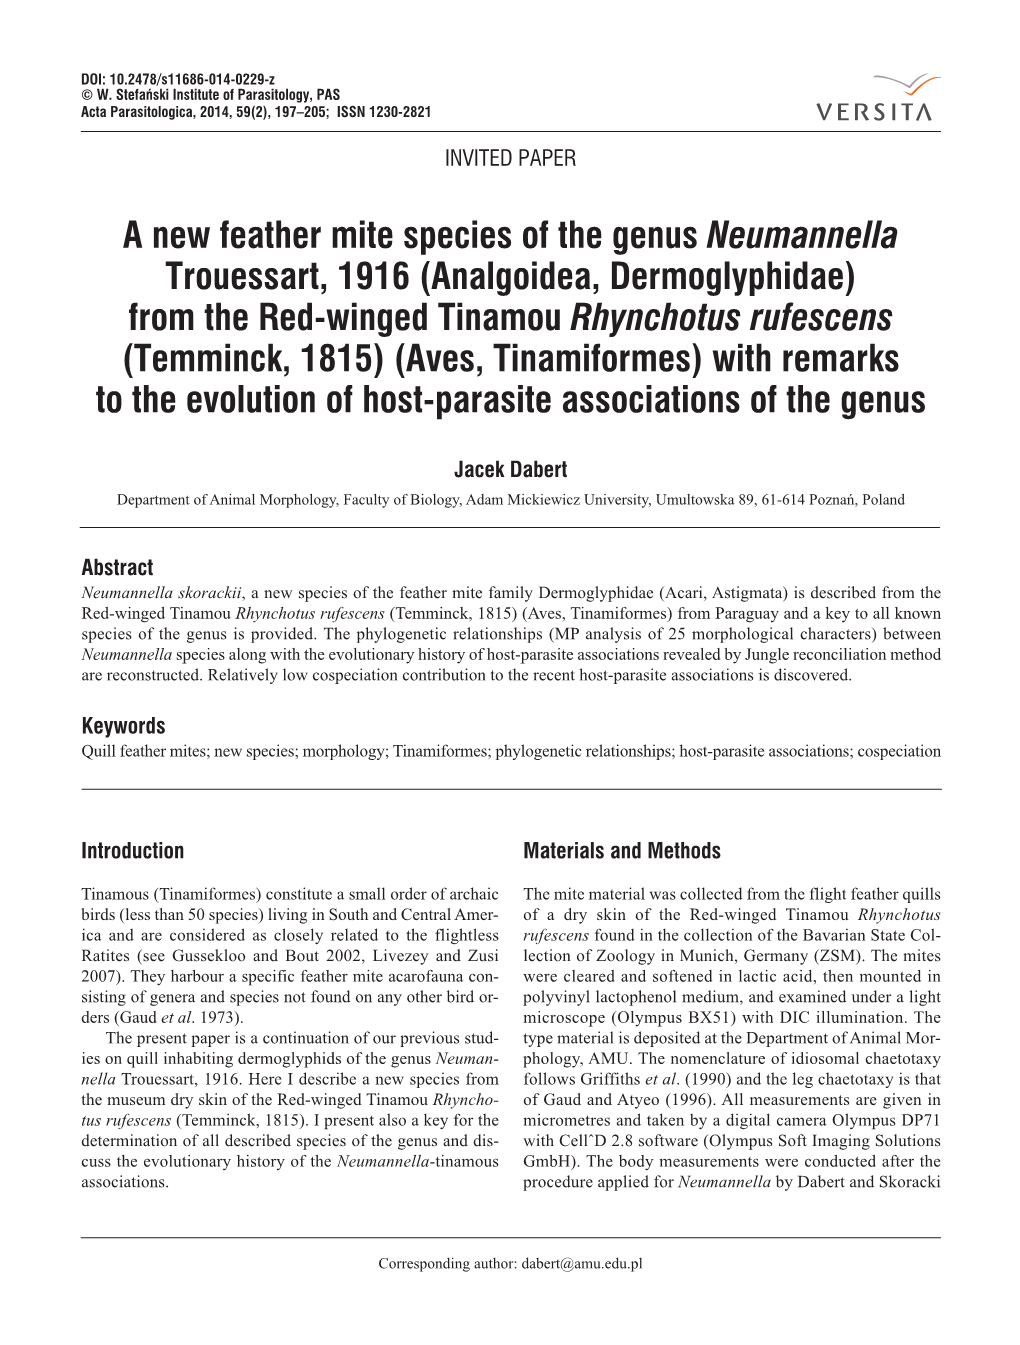 A New Feather Mite Species of the Genus Neumannella